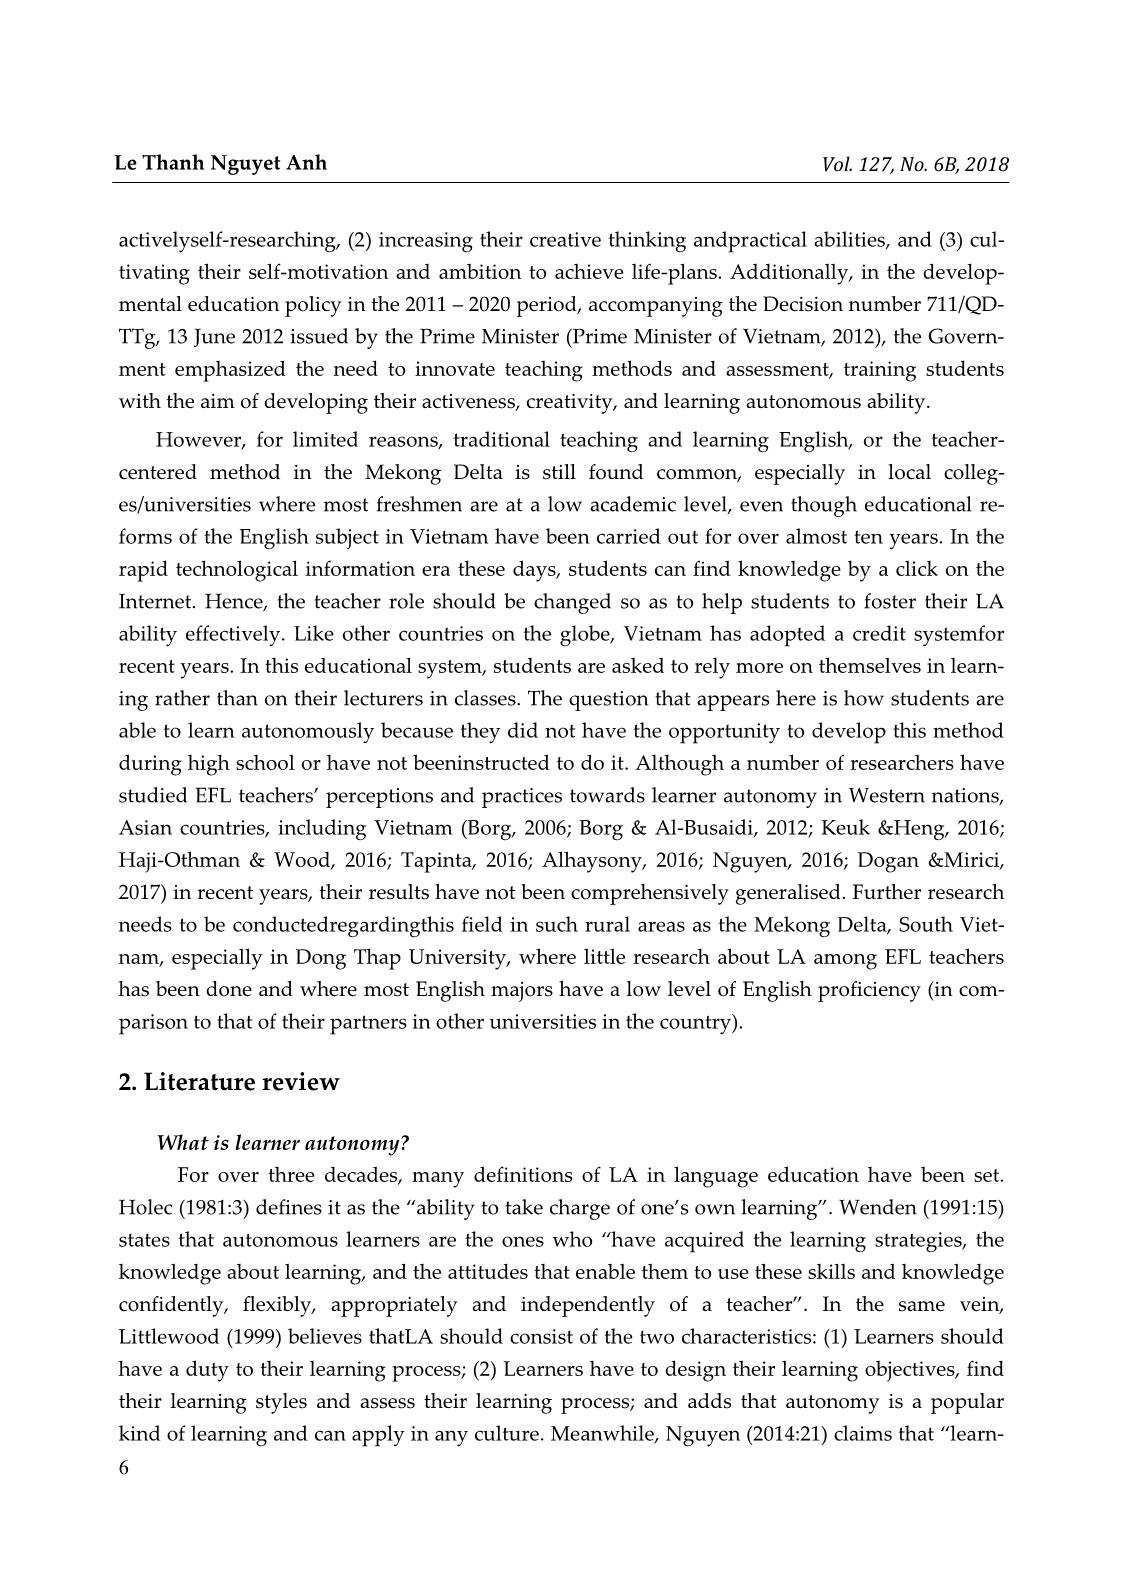 EFL teachers’ perceptions and practices regarding learner autonomy at Dong Thap University, Vietnam trang 2